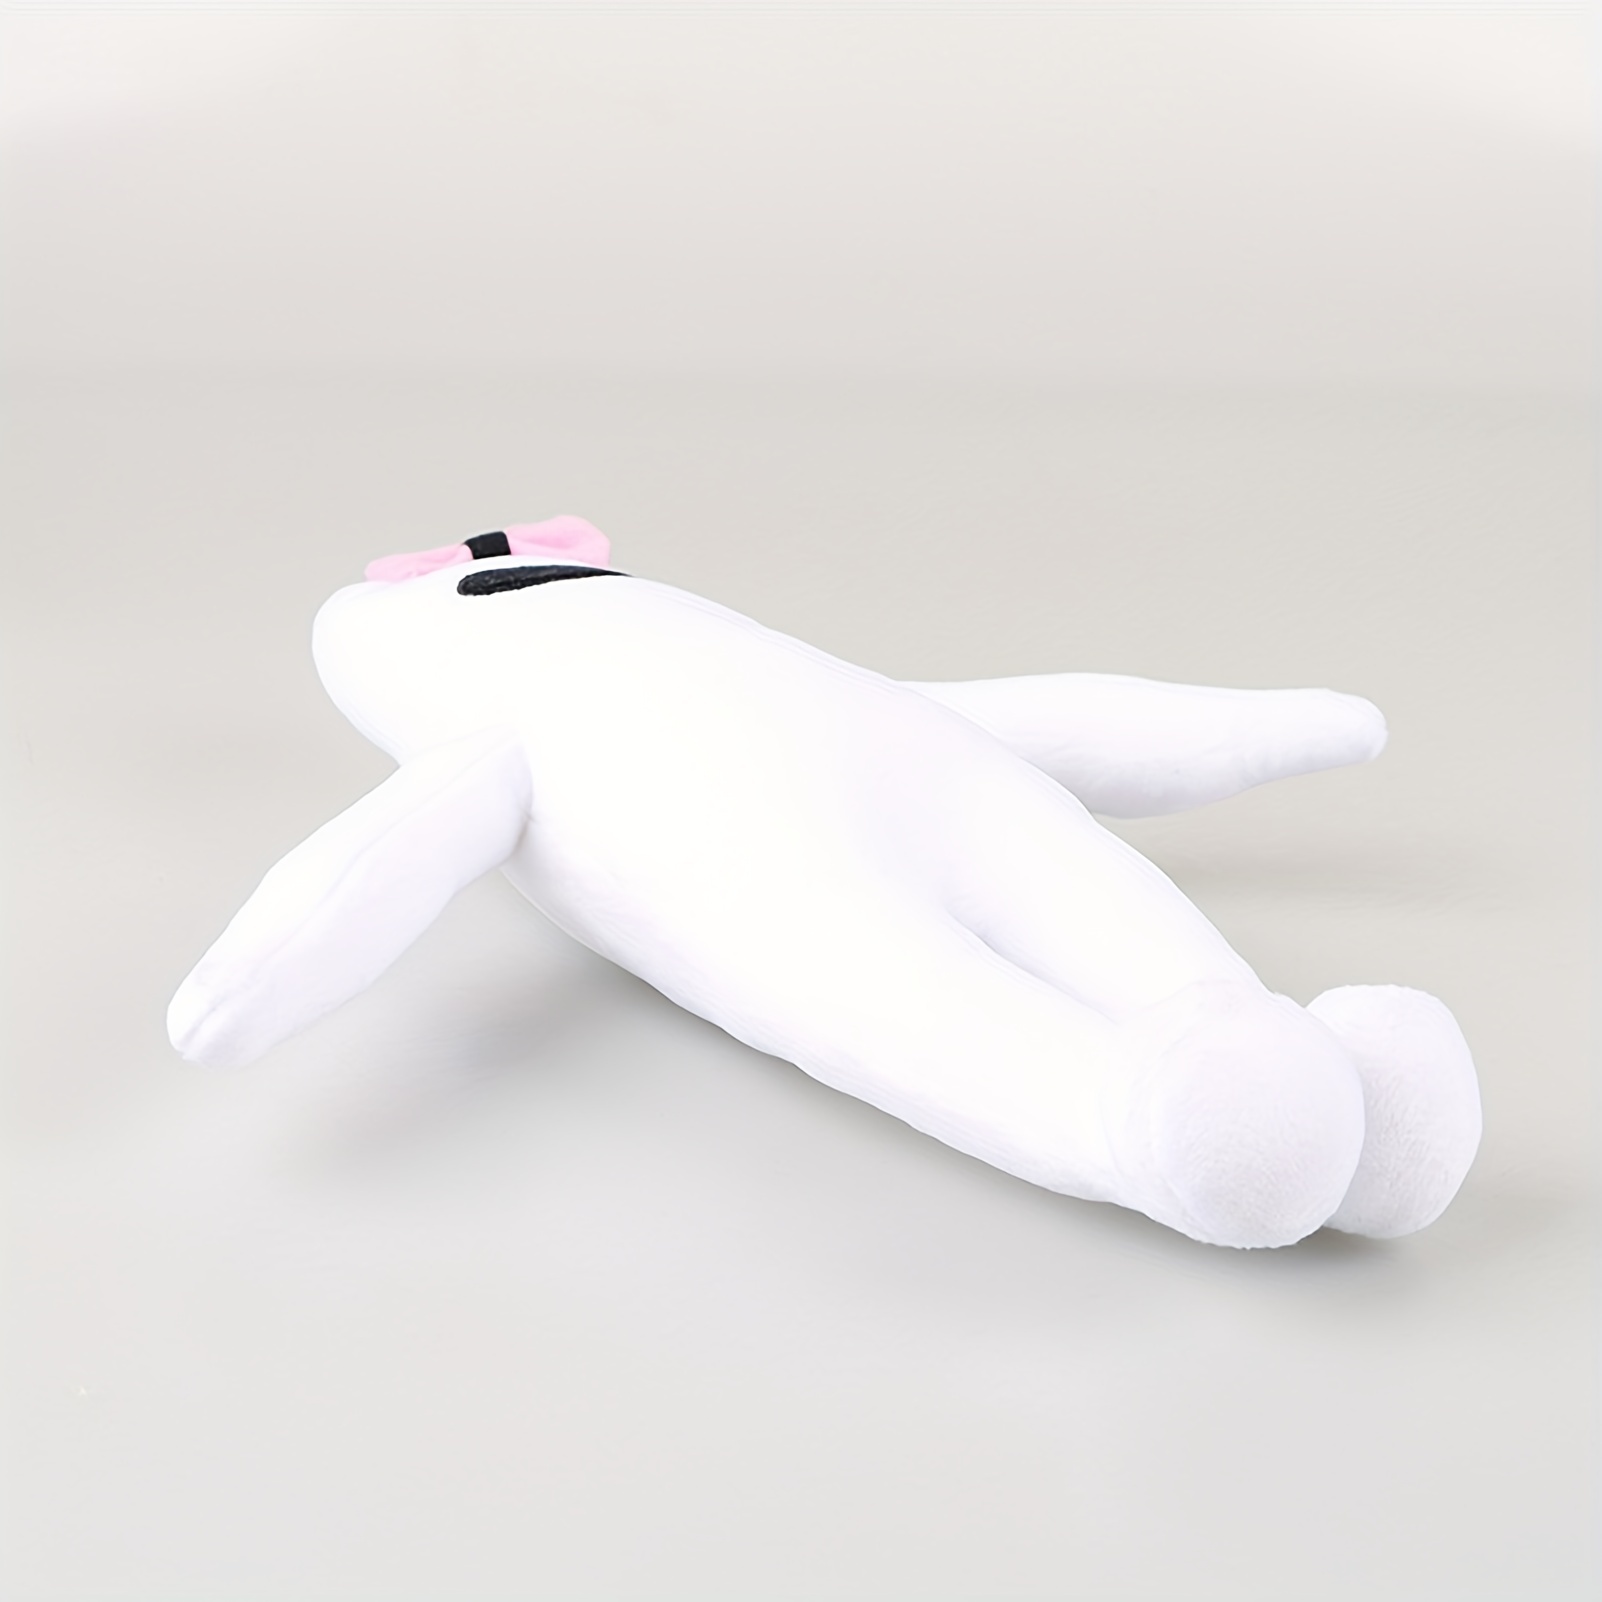 Jumbo Josh Plush Toys: Horror Game Anime Figures For Kids - Kawaii Soft Stuffed  Animals - Perfect Birthday Gift For Gamers! - Temu